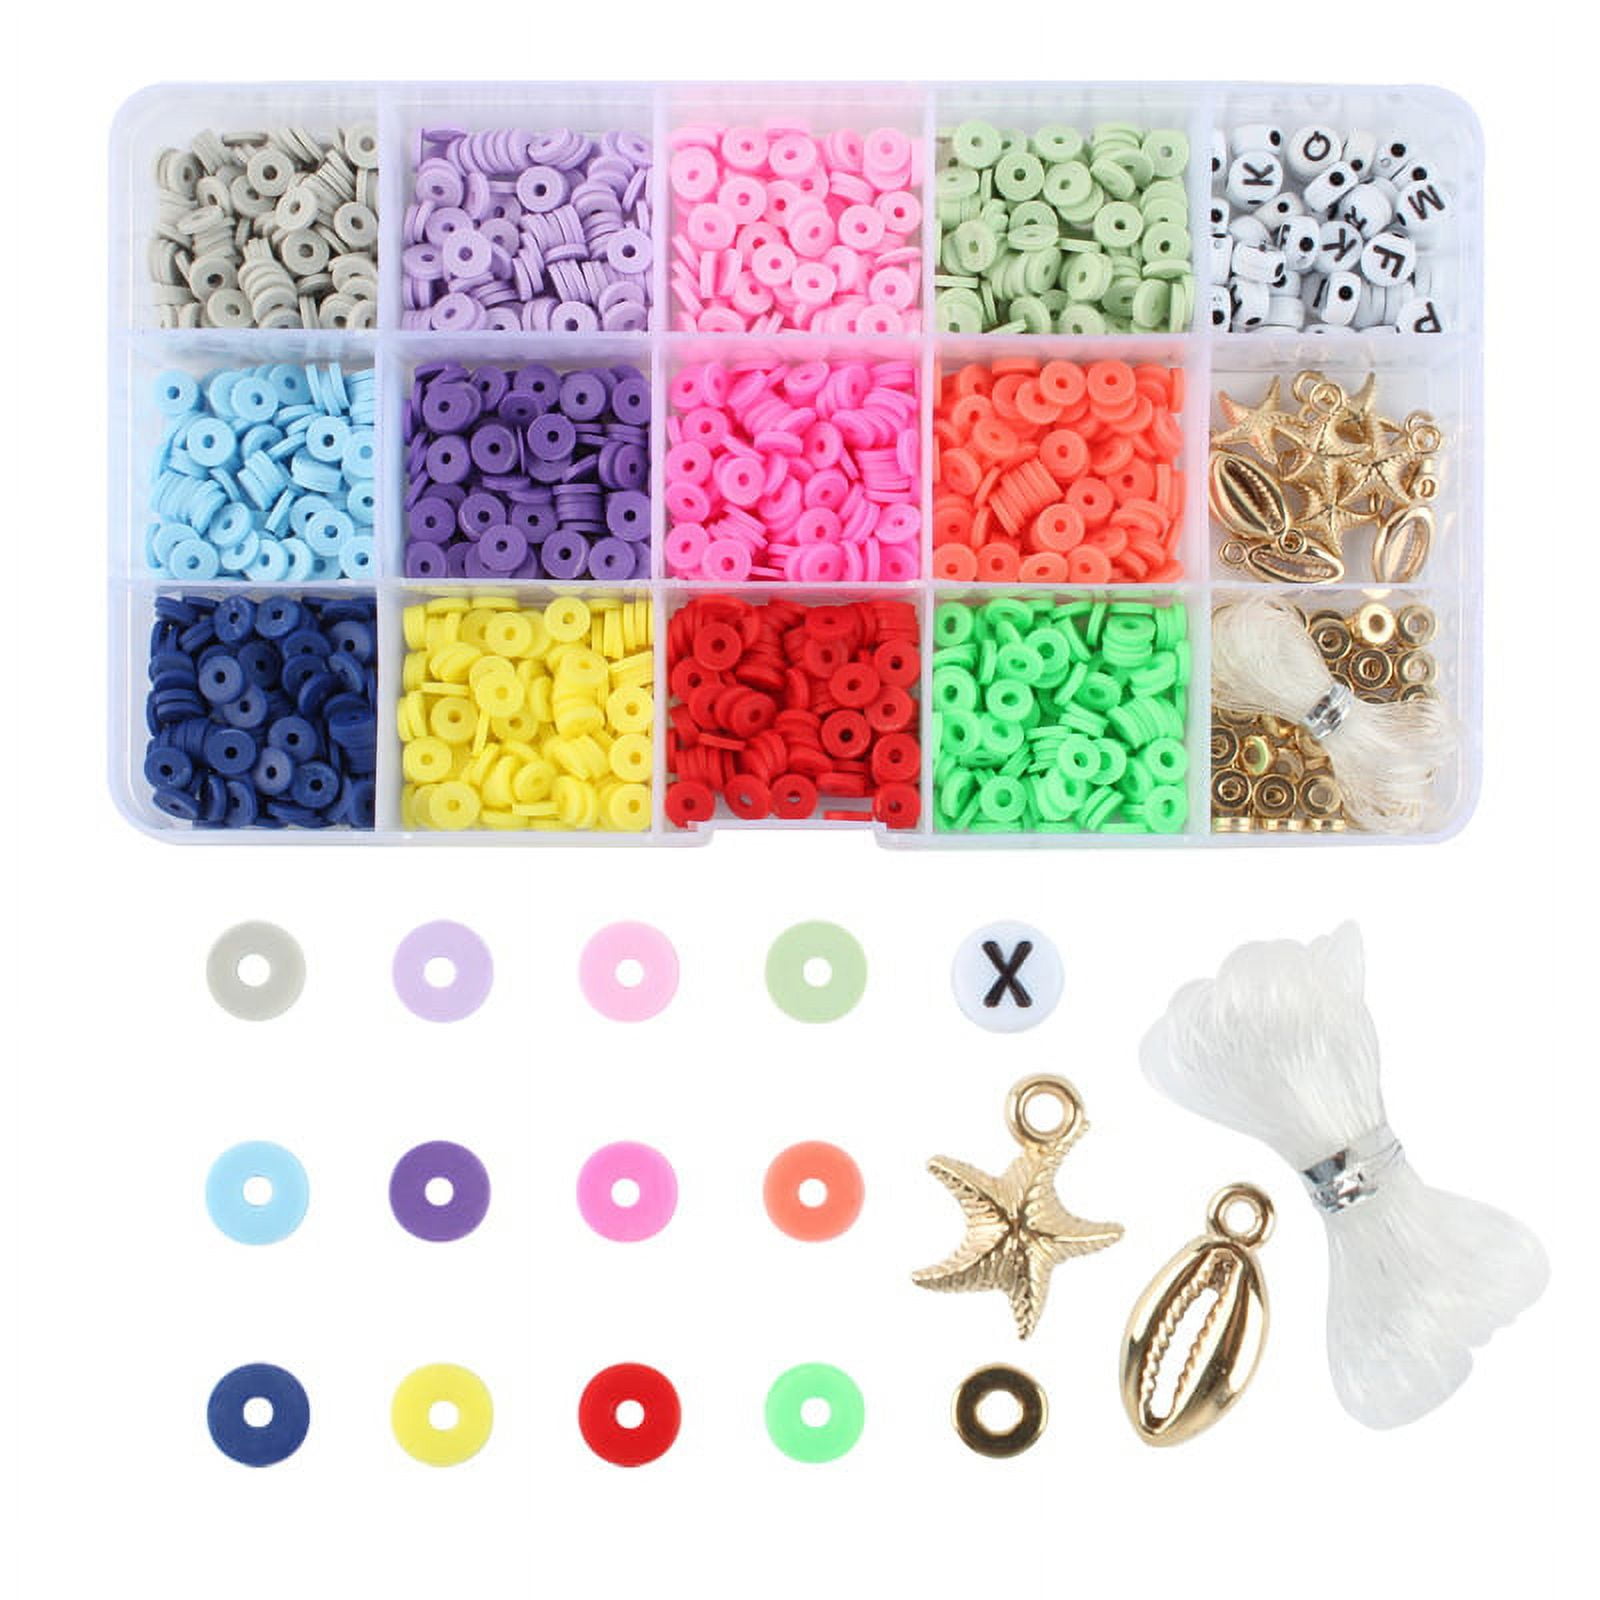 OCARDI 6615 Pcs Clay Beads Bracelet Making Kit,Beads for Jewelry Making Kit with Flat P